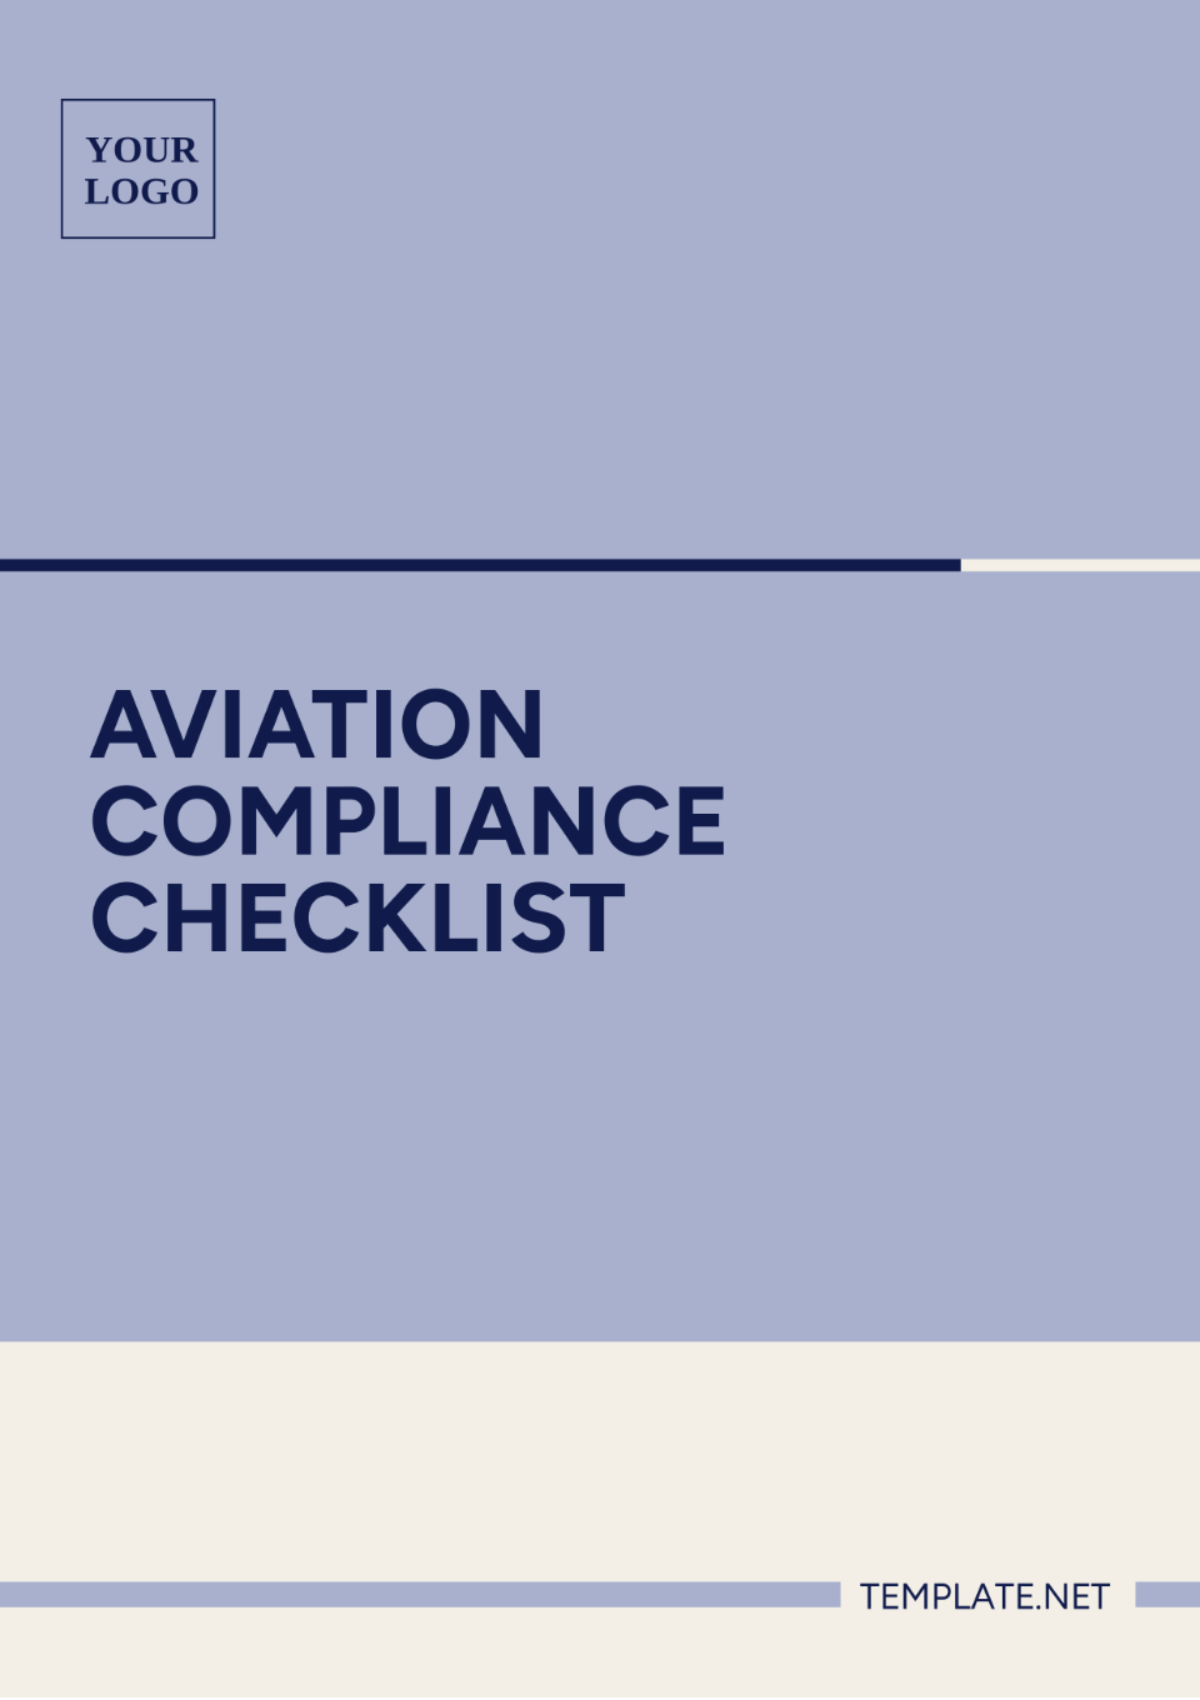 Aviation Compliance Checklist Template